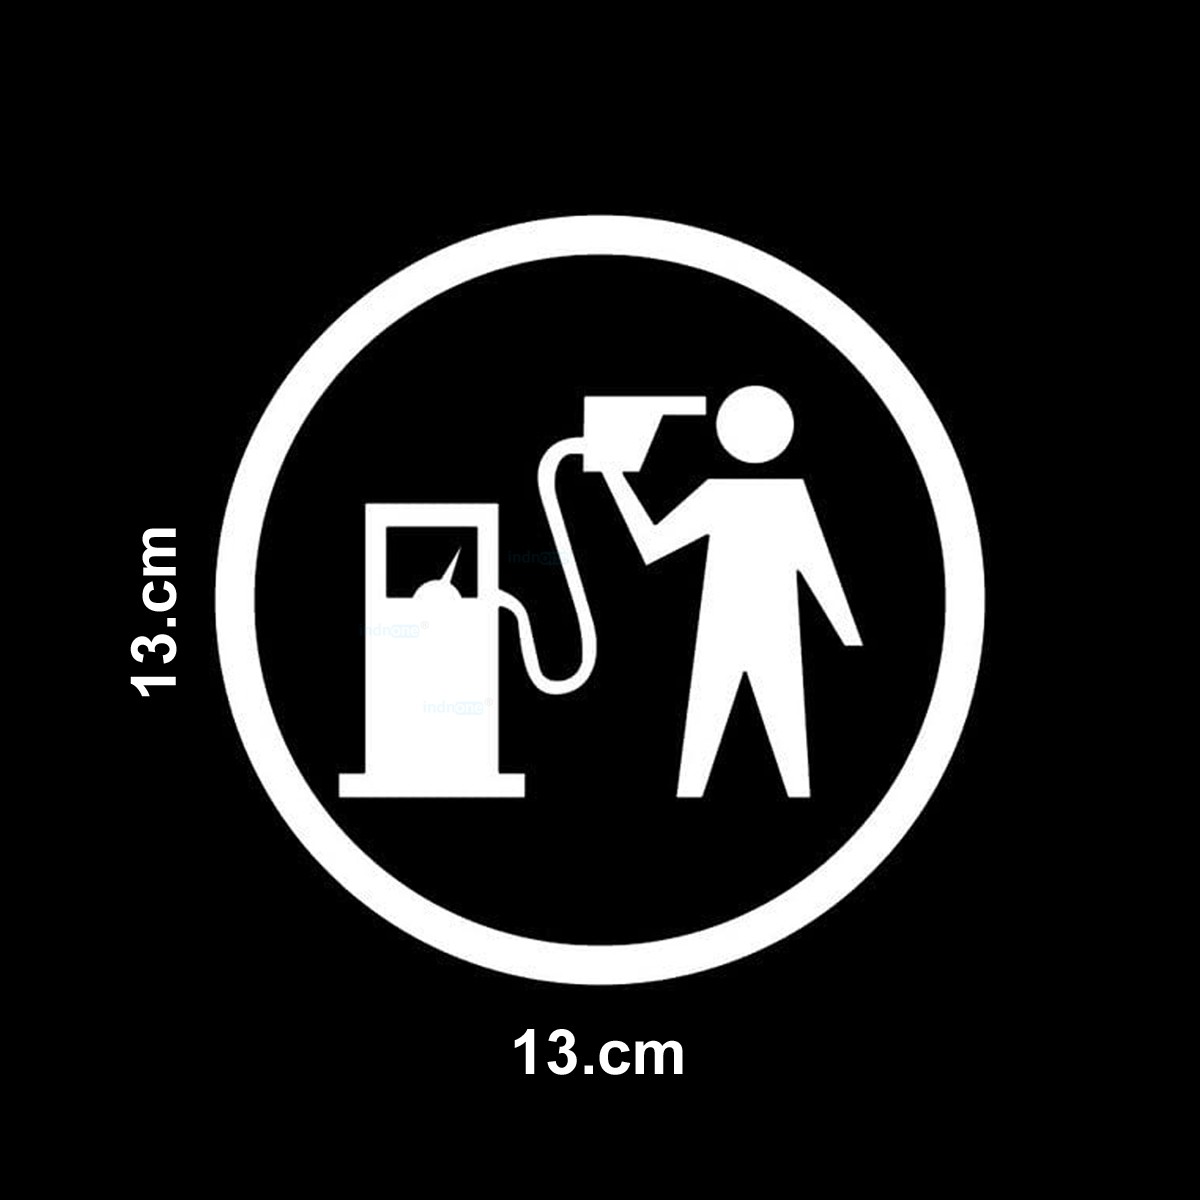 indnone® Shoot Petrol Logo Sticker for Car. Car Sticker Stylish Fuel Lid | Whit Standard Size